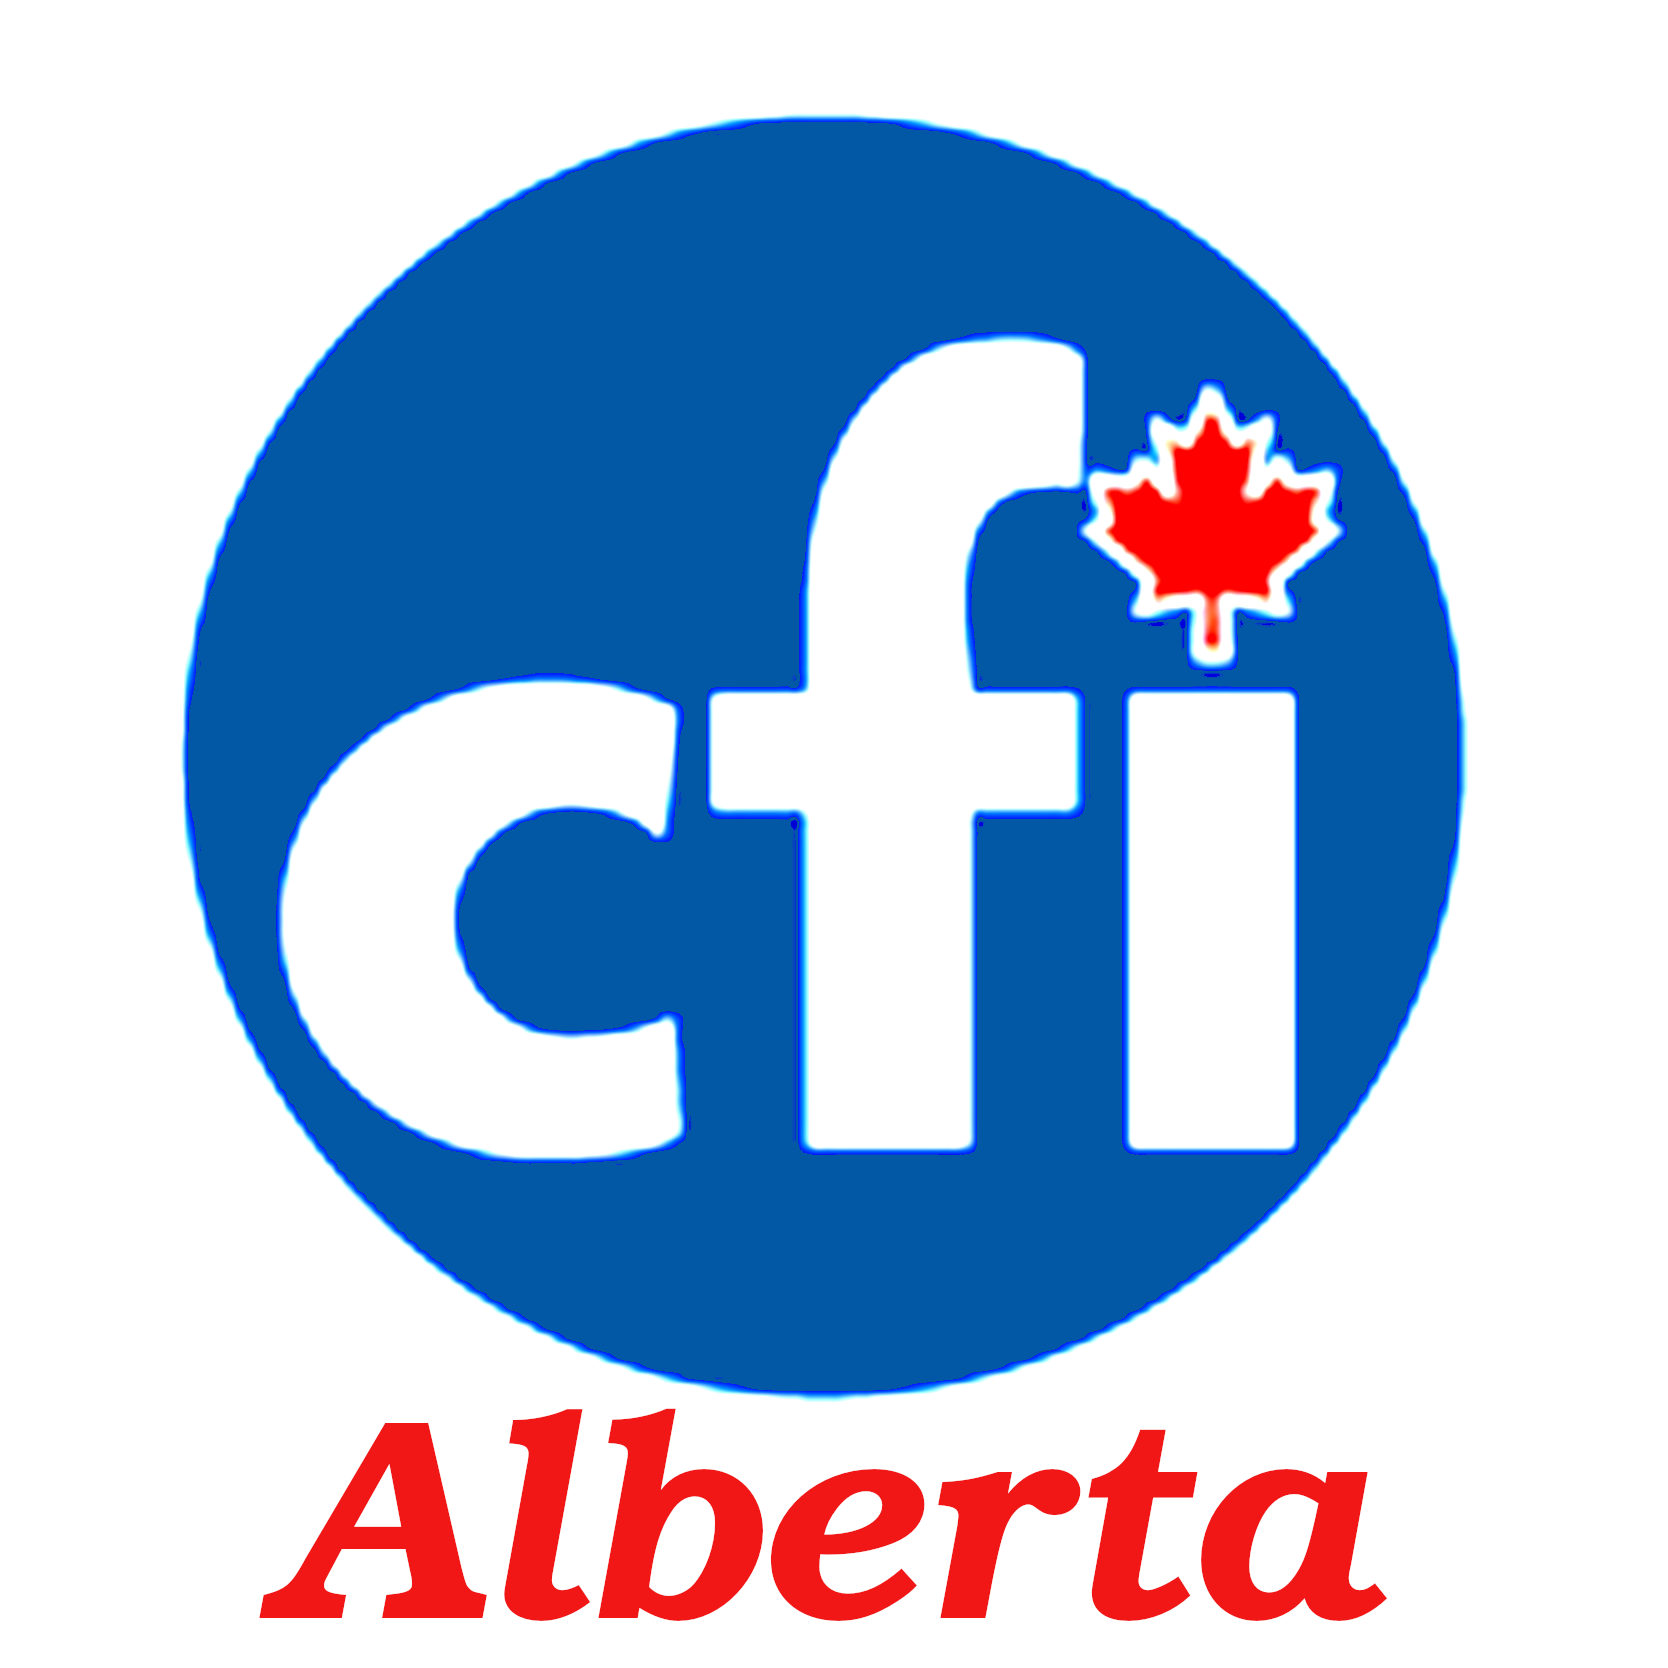 Introducing CFIC Alberta